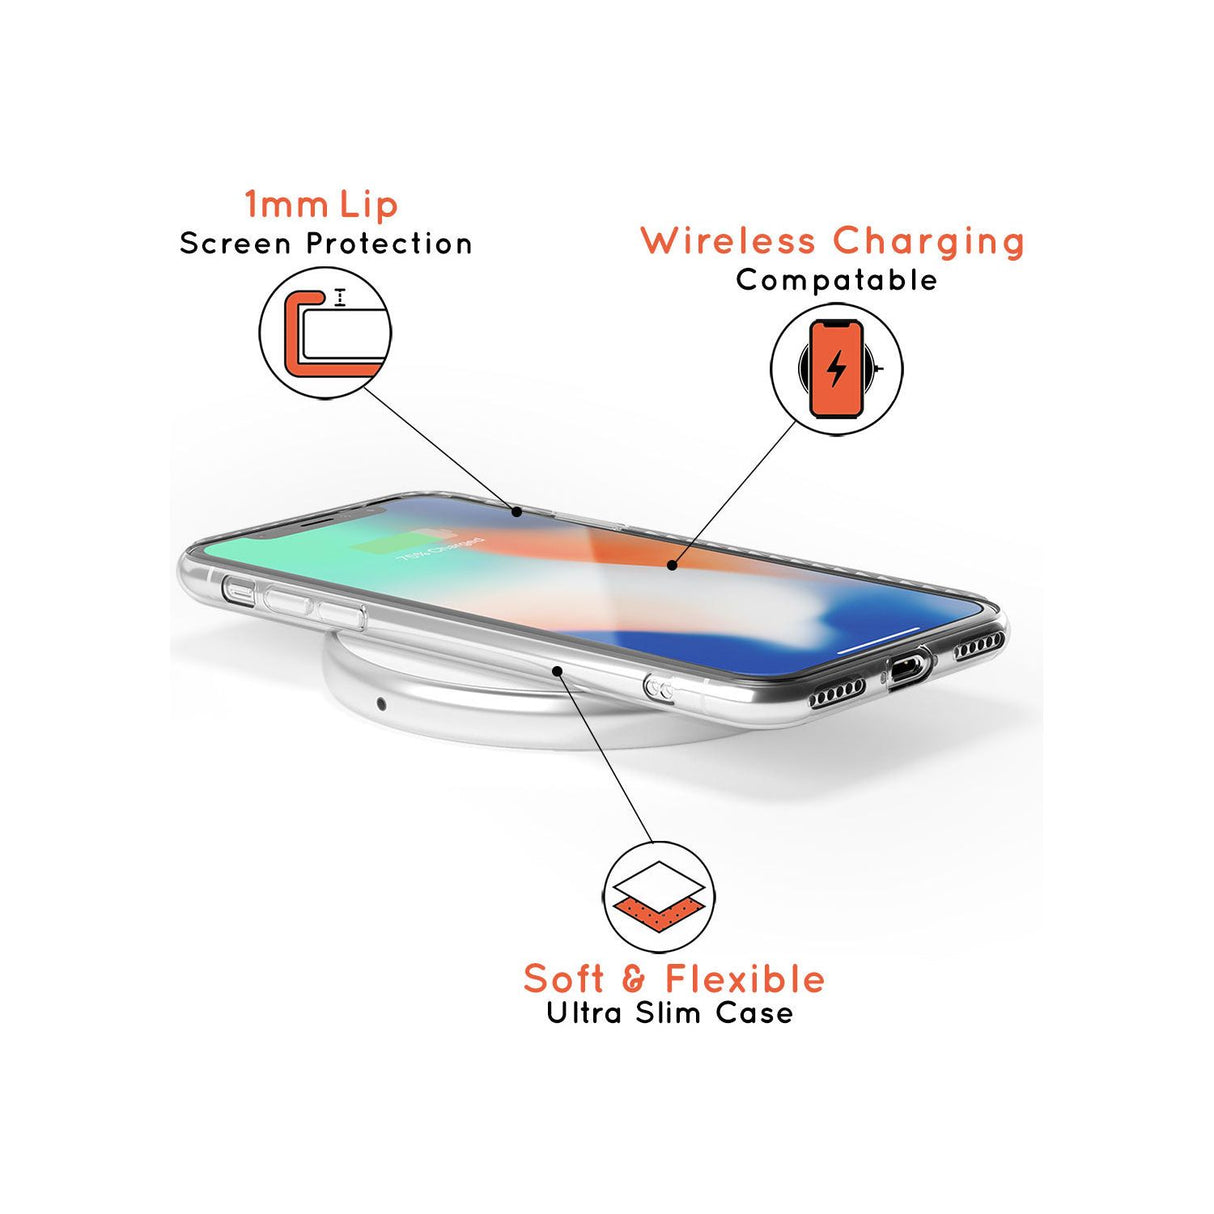 Pisces Emblem - Transparent Design Slim TPU Phone Case for iPhone 11